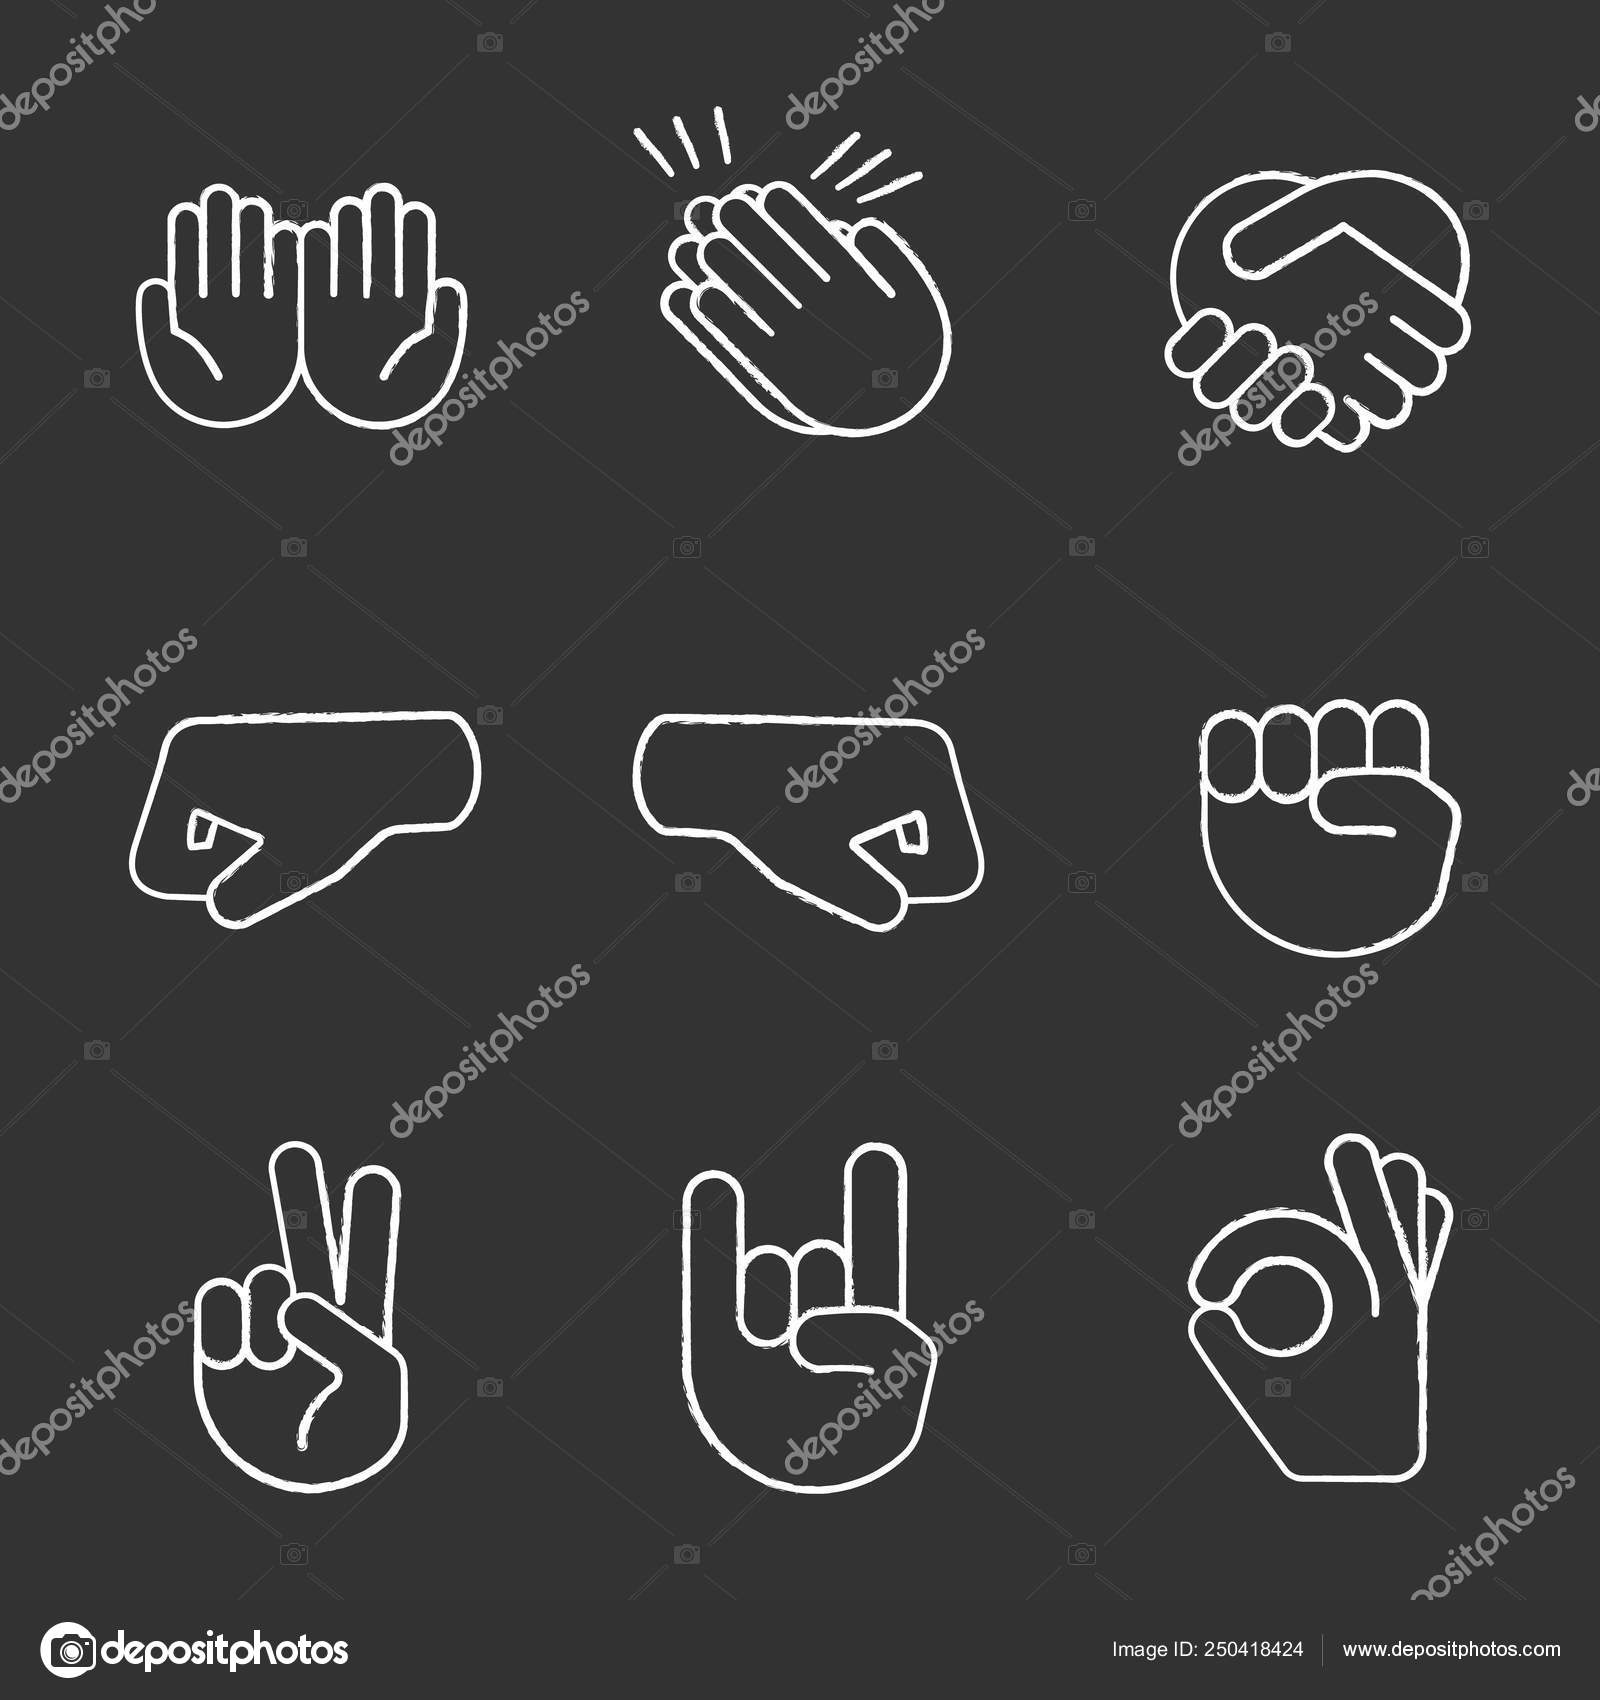 Handshake icon. Hand gesture emoji vector illustration. Stock